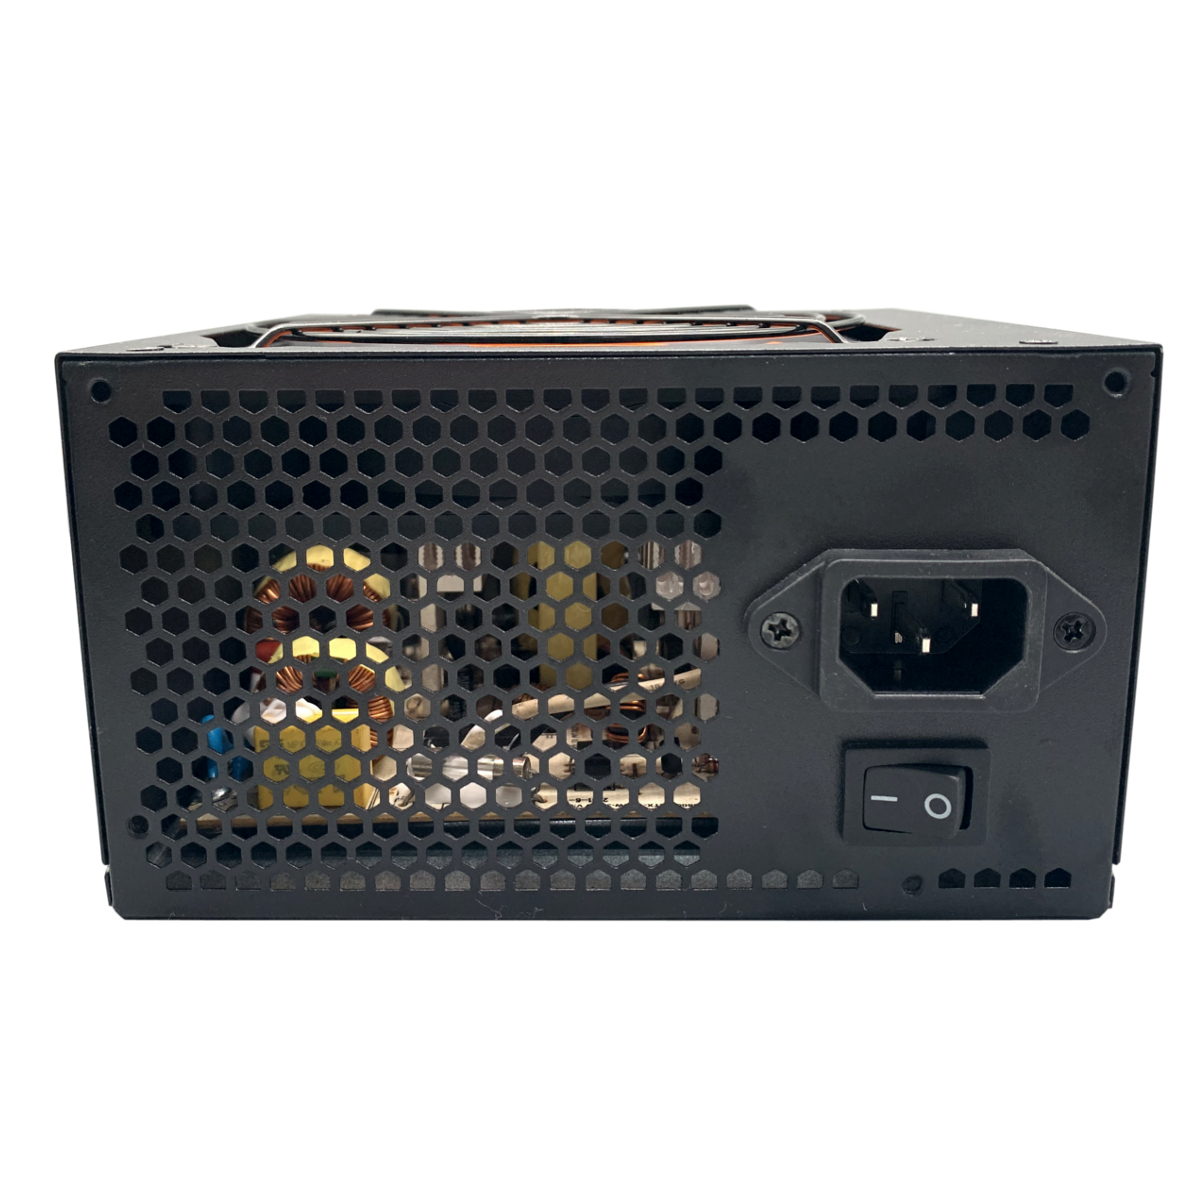 450W-Gaming-PC-Desktop-Computer-ATX-12V-Power-Supply-24-Pin-PCI-120mm-LED-Fan-1709950-10